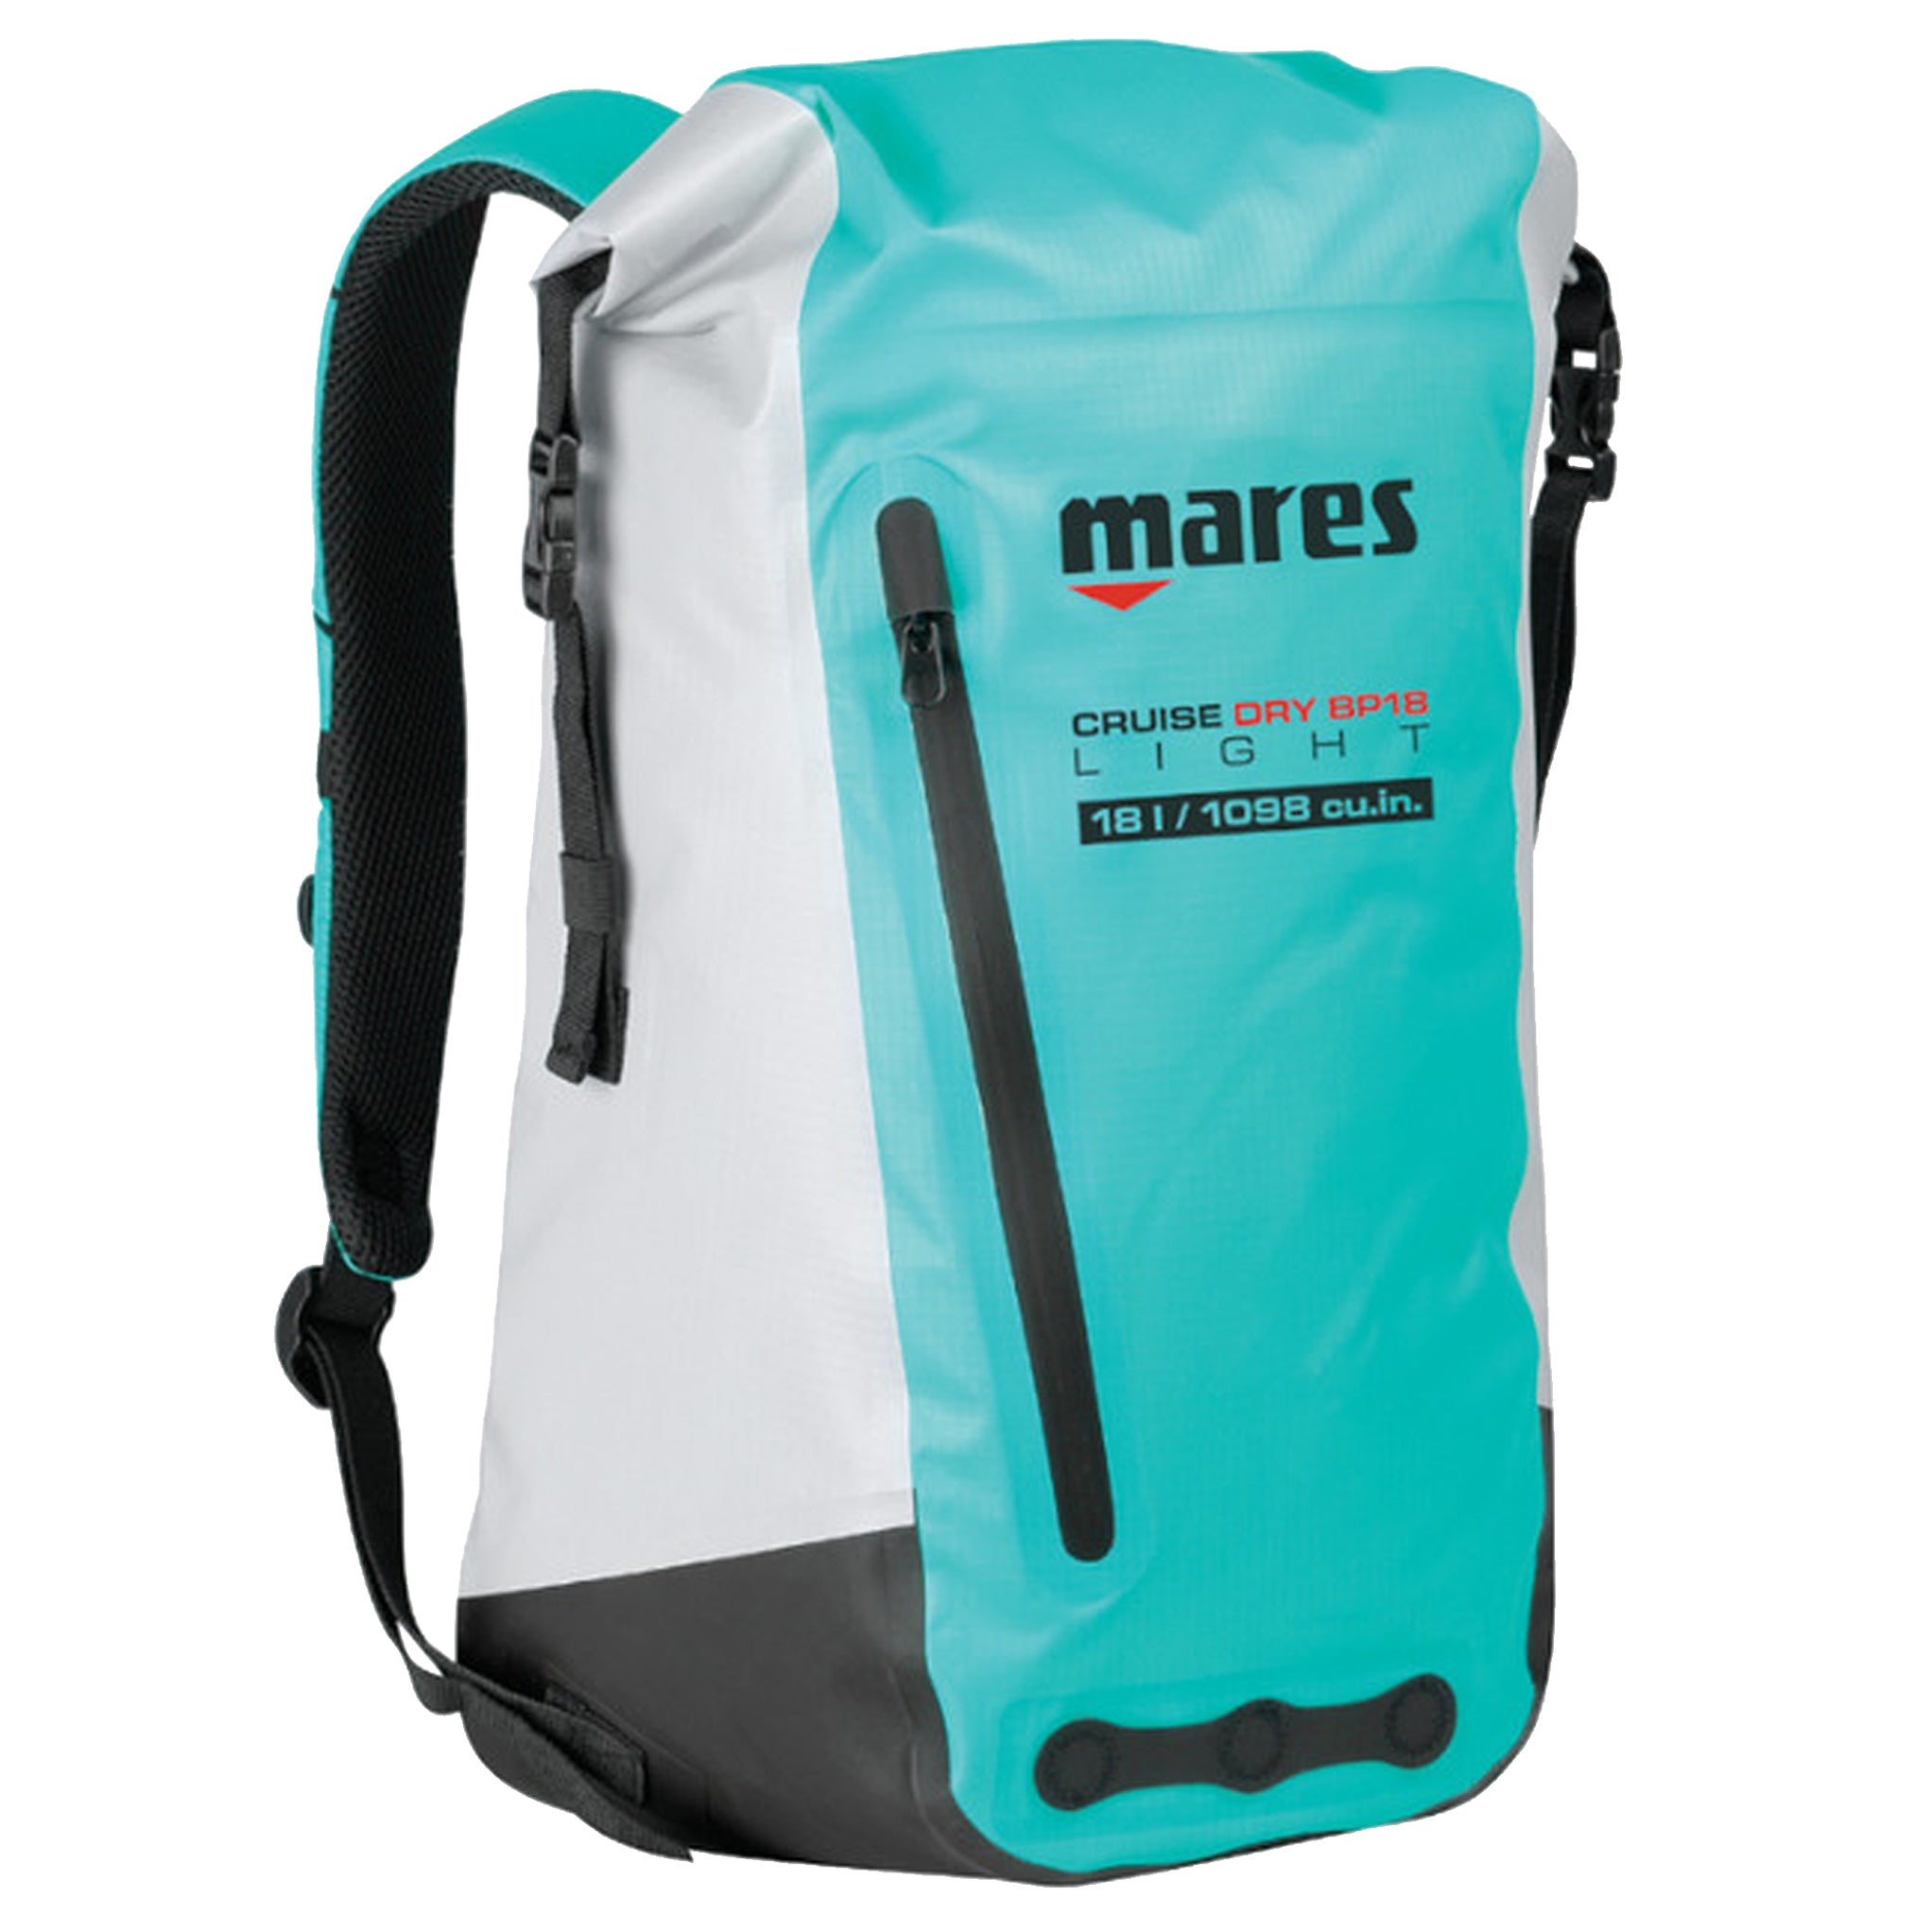 Mares Cruise Dry BP18 Light Backpack Bag | Aqua